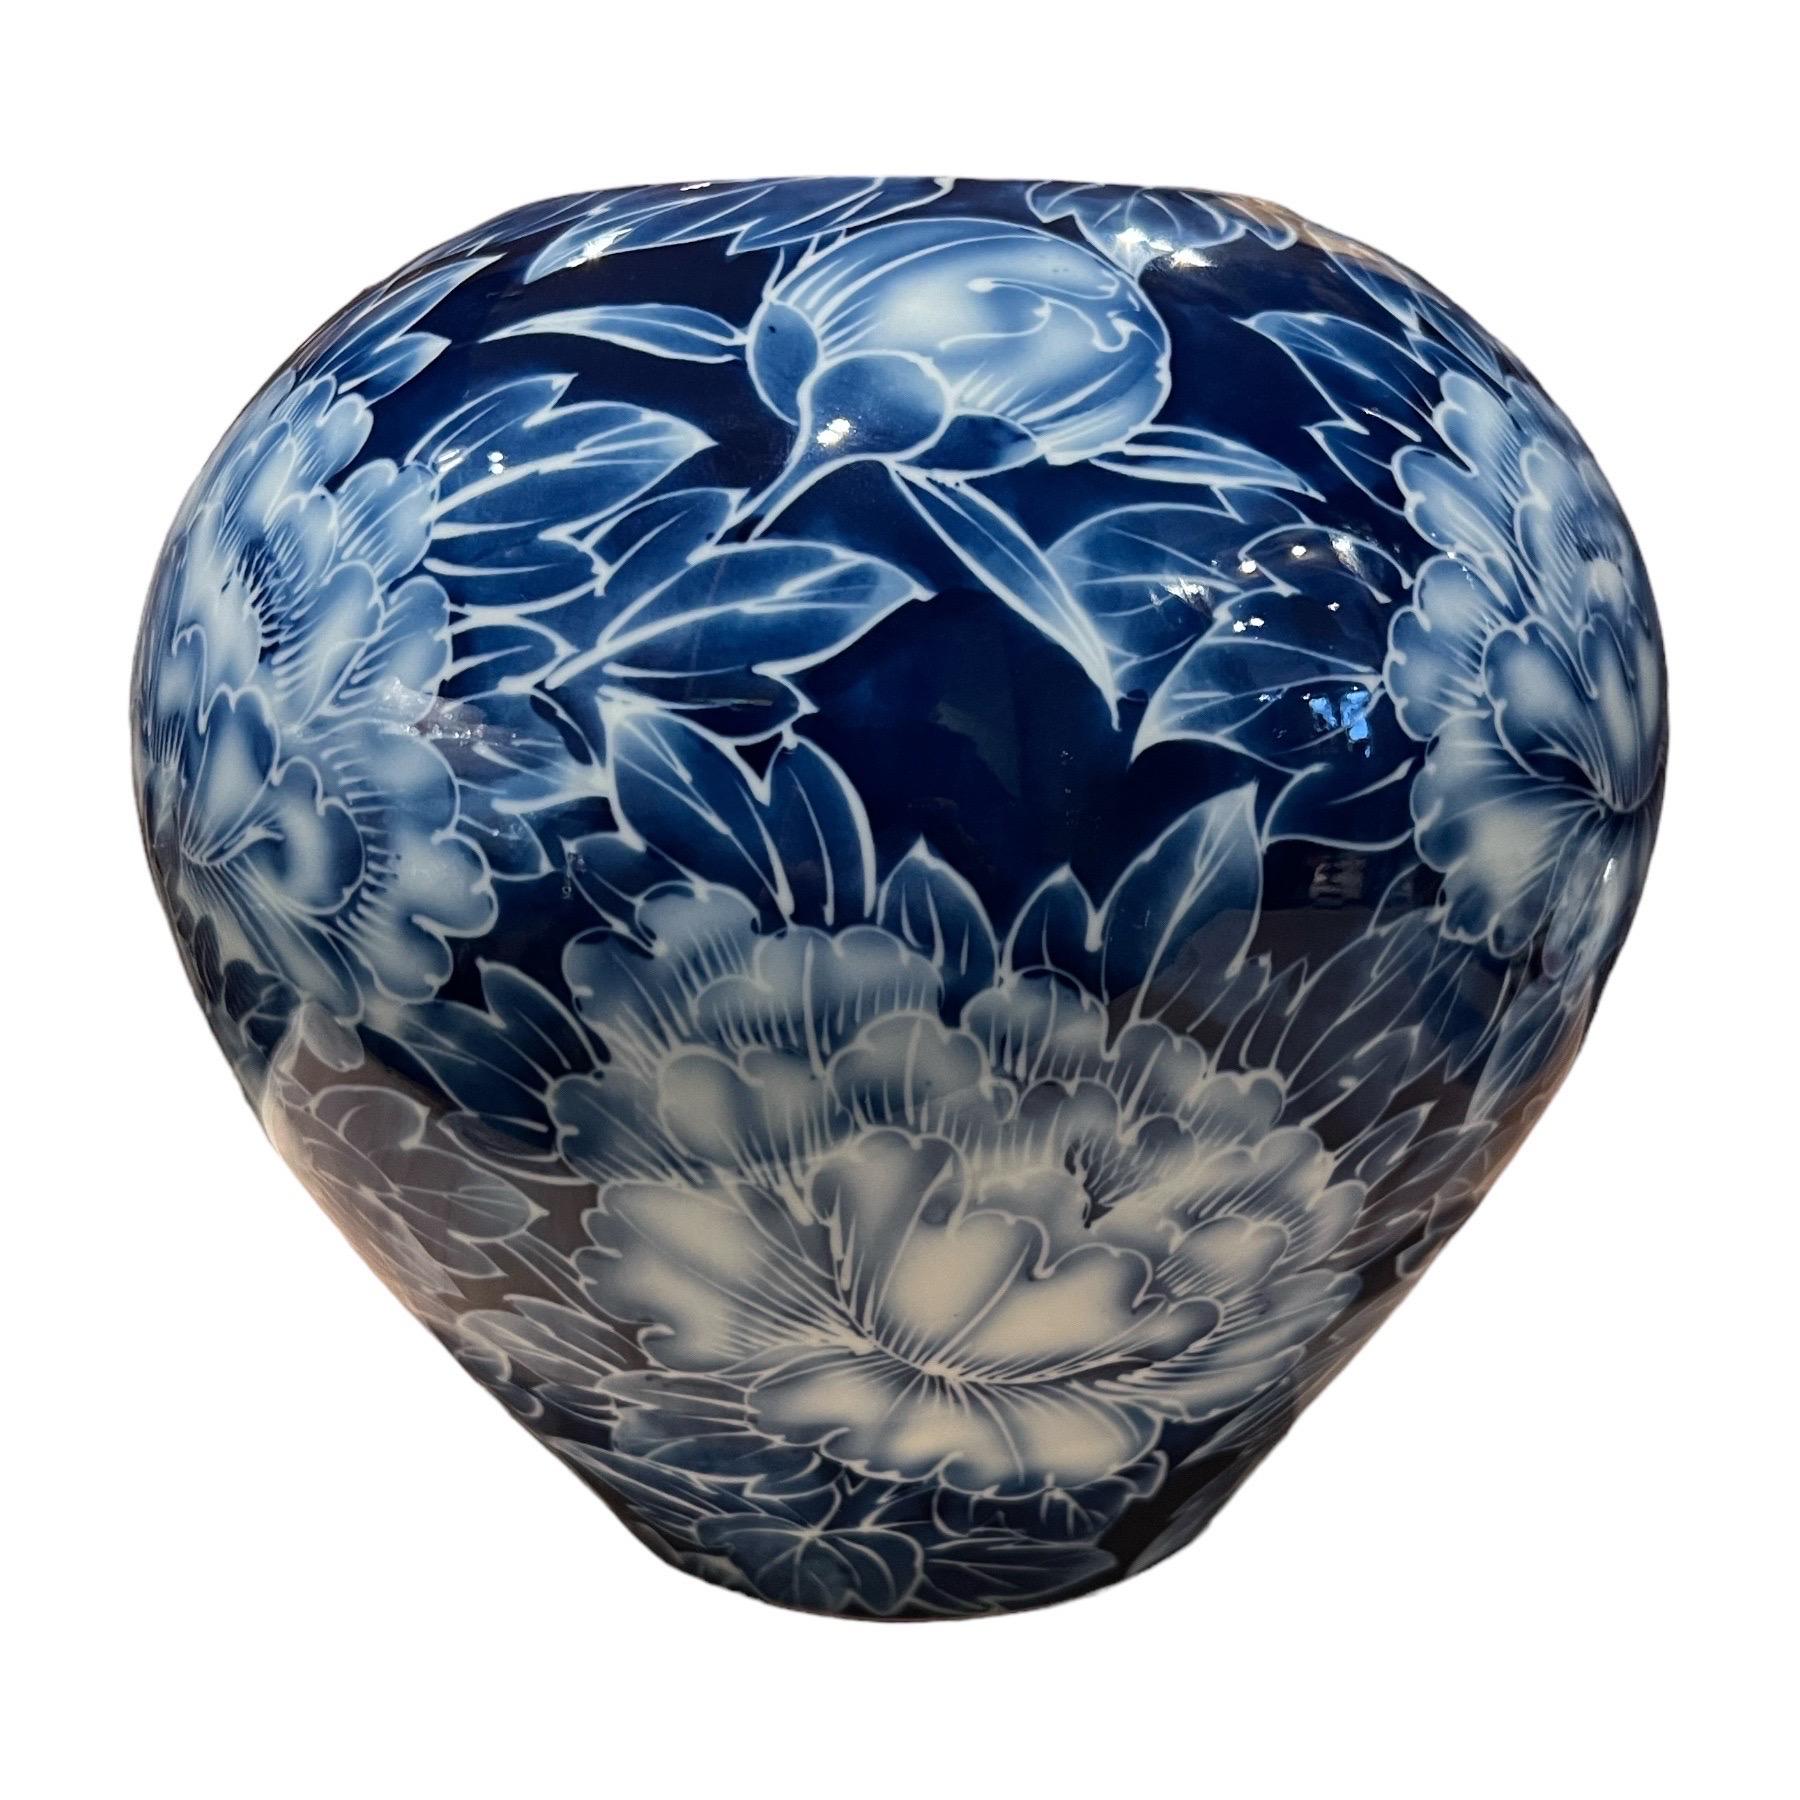 Japanese porcelain Arita Vase - Blue peonies - Signed - Japan circa 1970 For Sale